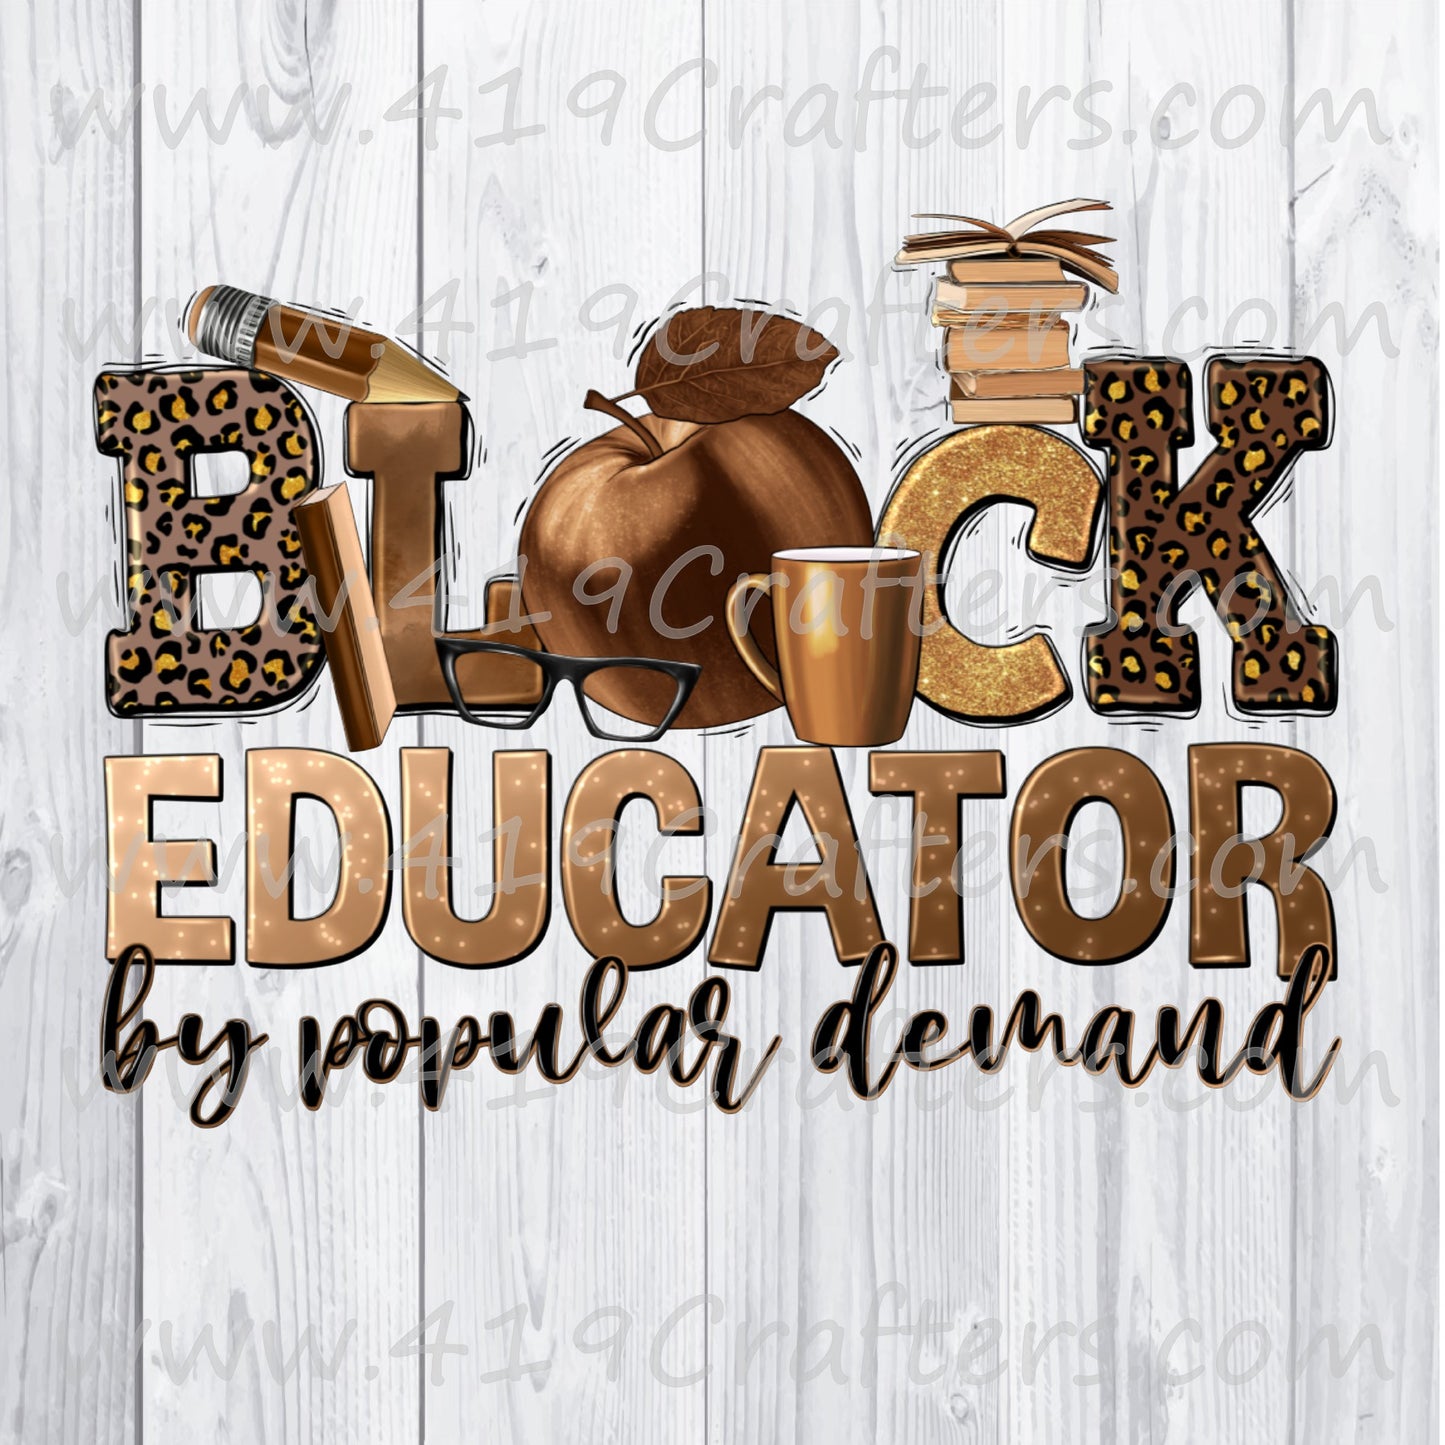 BLACK EDUCATOR